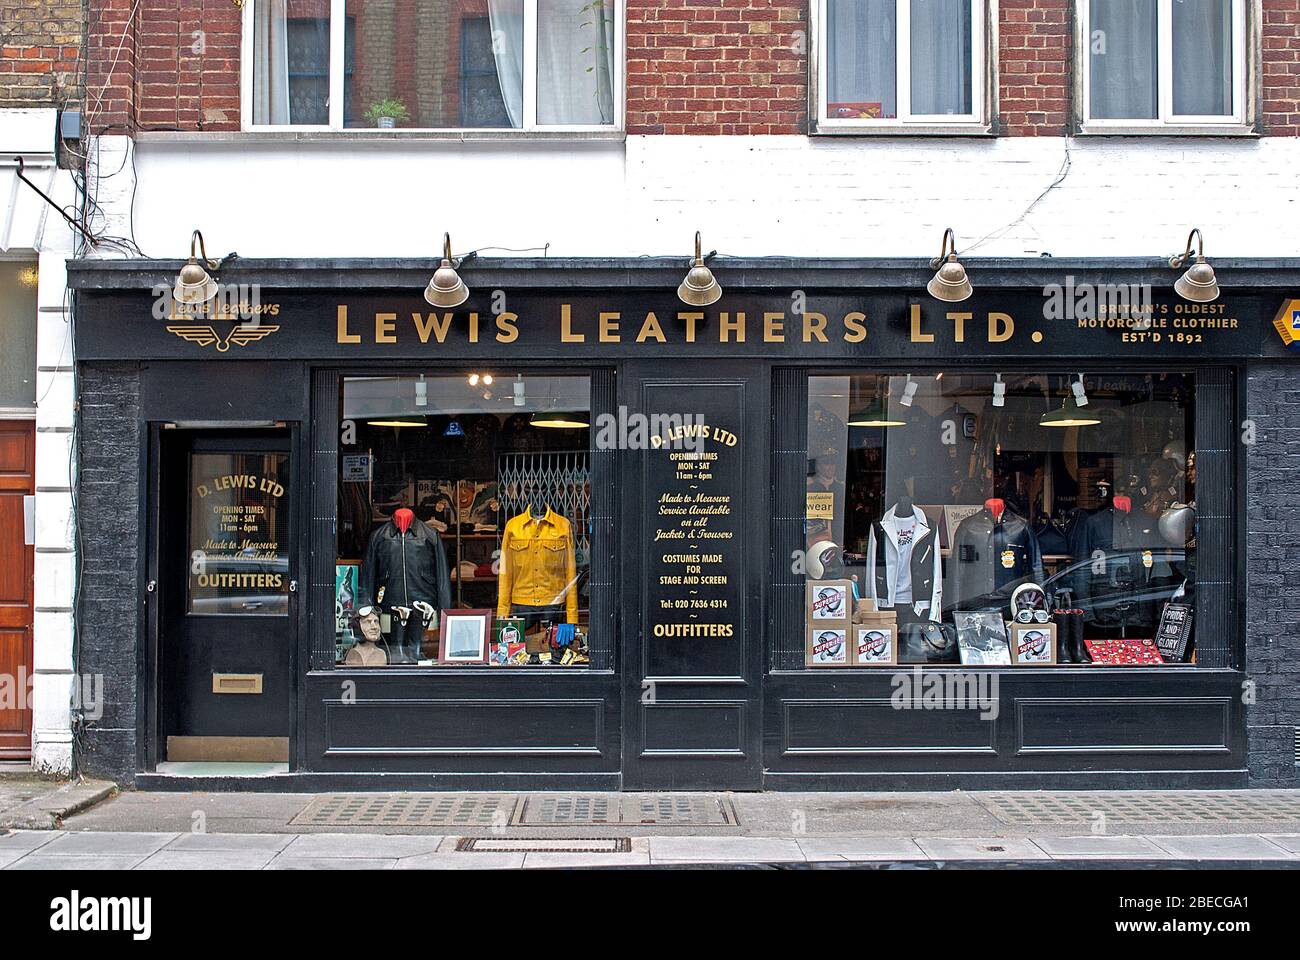 Lewis Leathers Ltd, Mottram House, 3-5 Whitfield St, Bloomsbury, Londra W1T 2SA Foto Stock